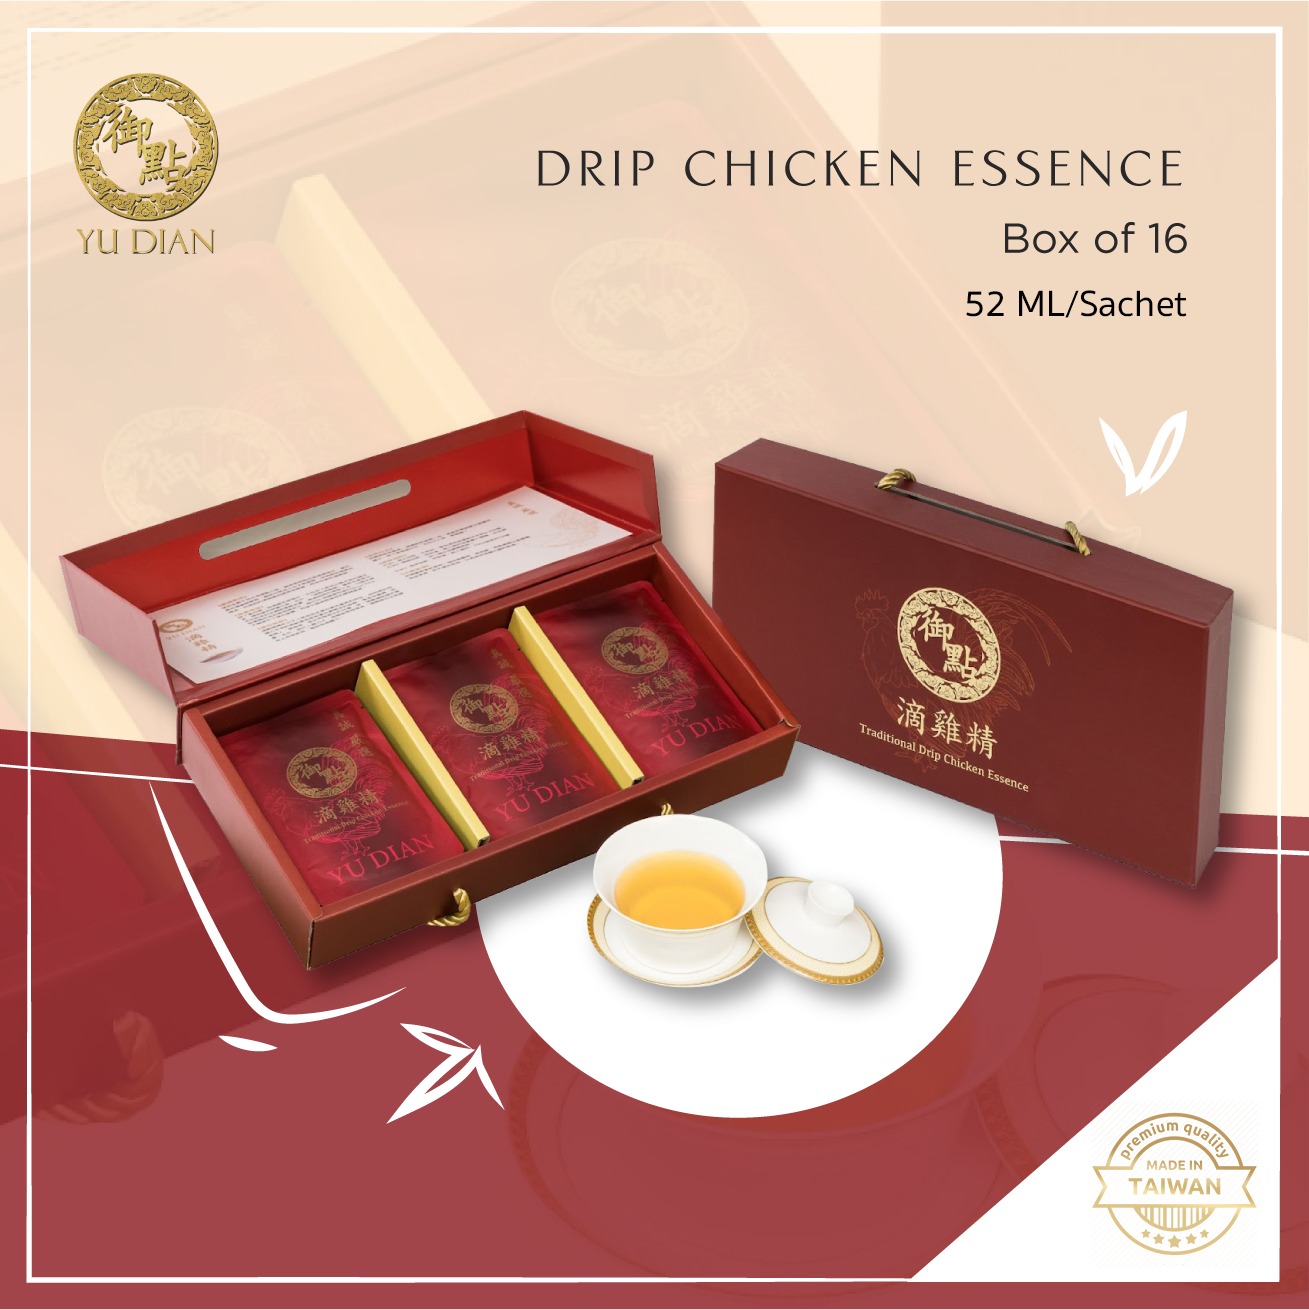 Yu Dian Drip Chicken Essence (Box of 16)